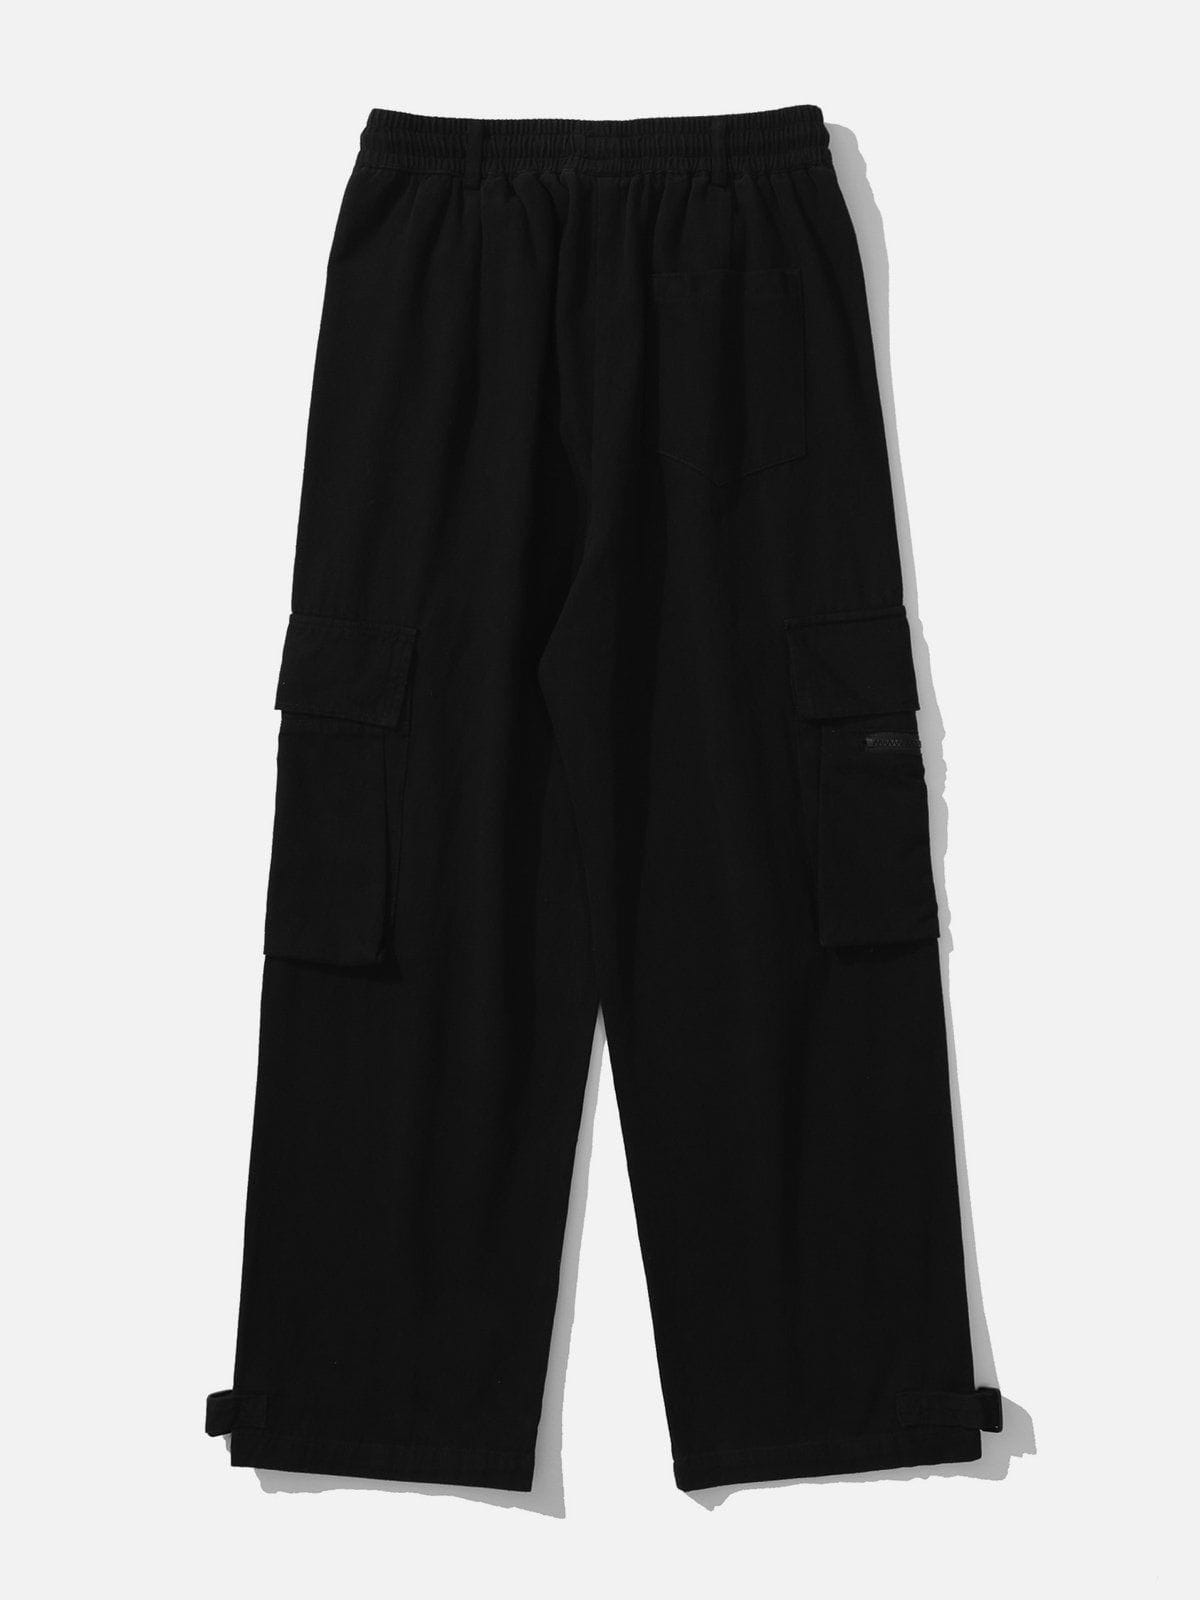 Majesda® - Solid Multi-Pocket Cargo Pants outfit ideas streetwear fashion